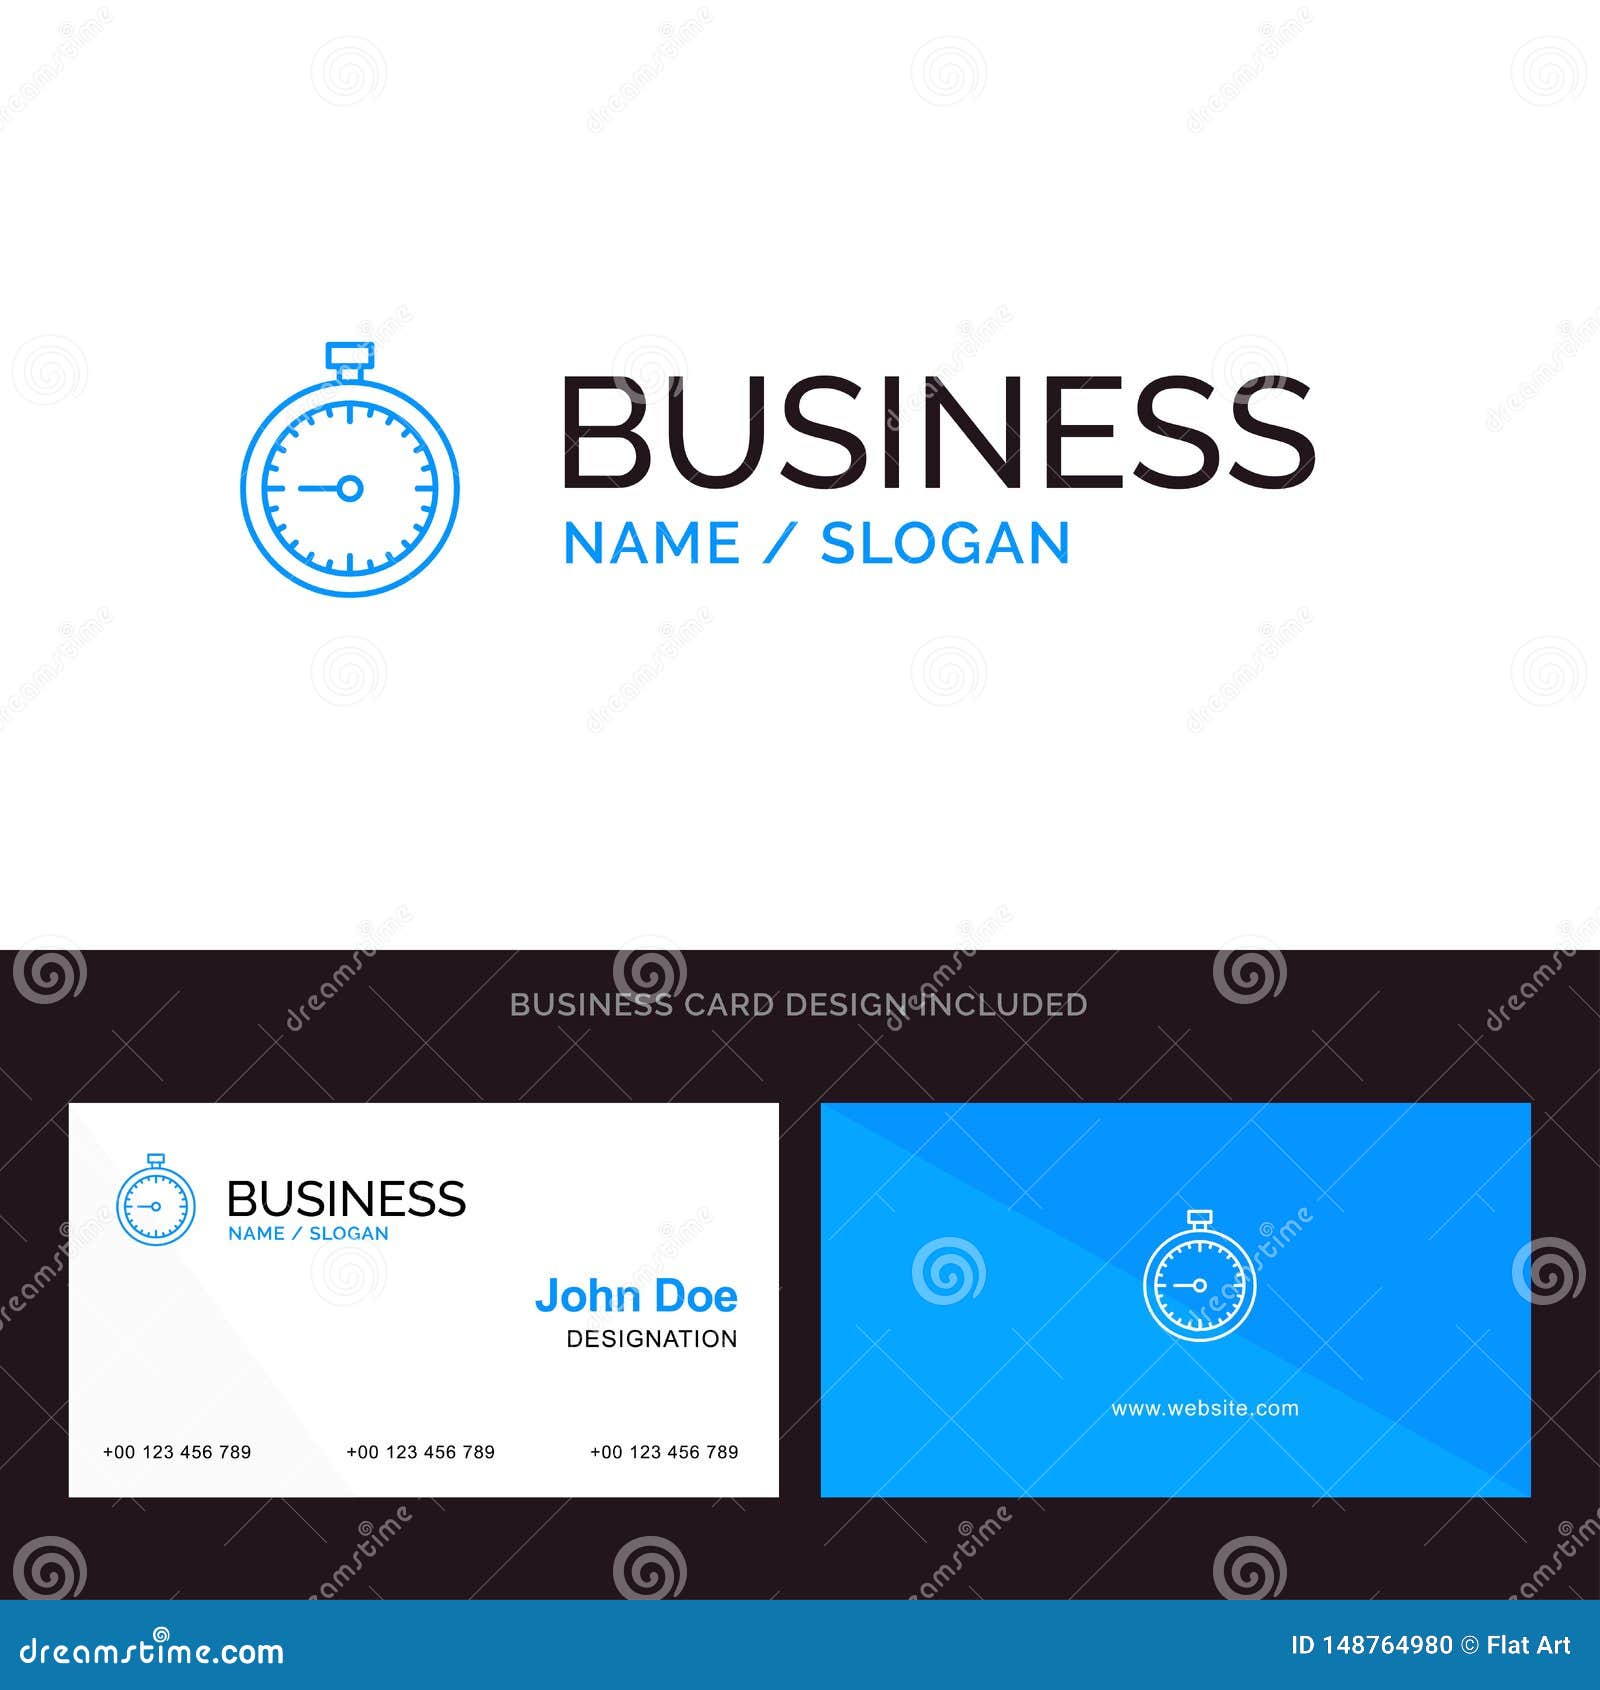 Design Templates Photoshop Executive Business Card Free Psd Business Card Template